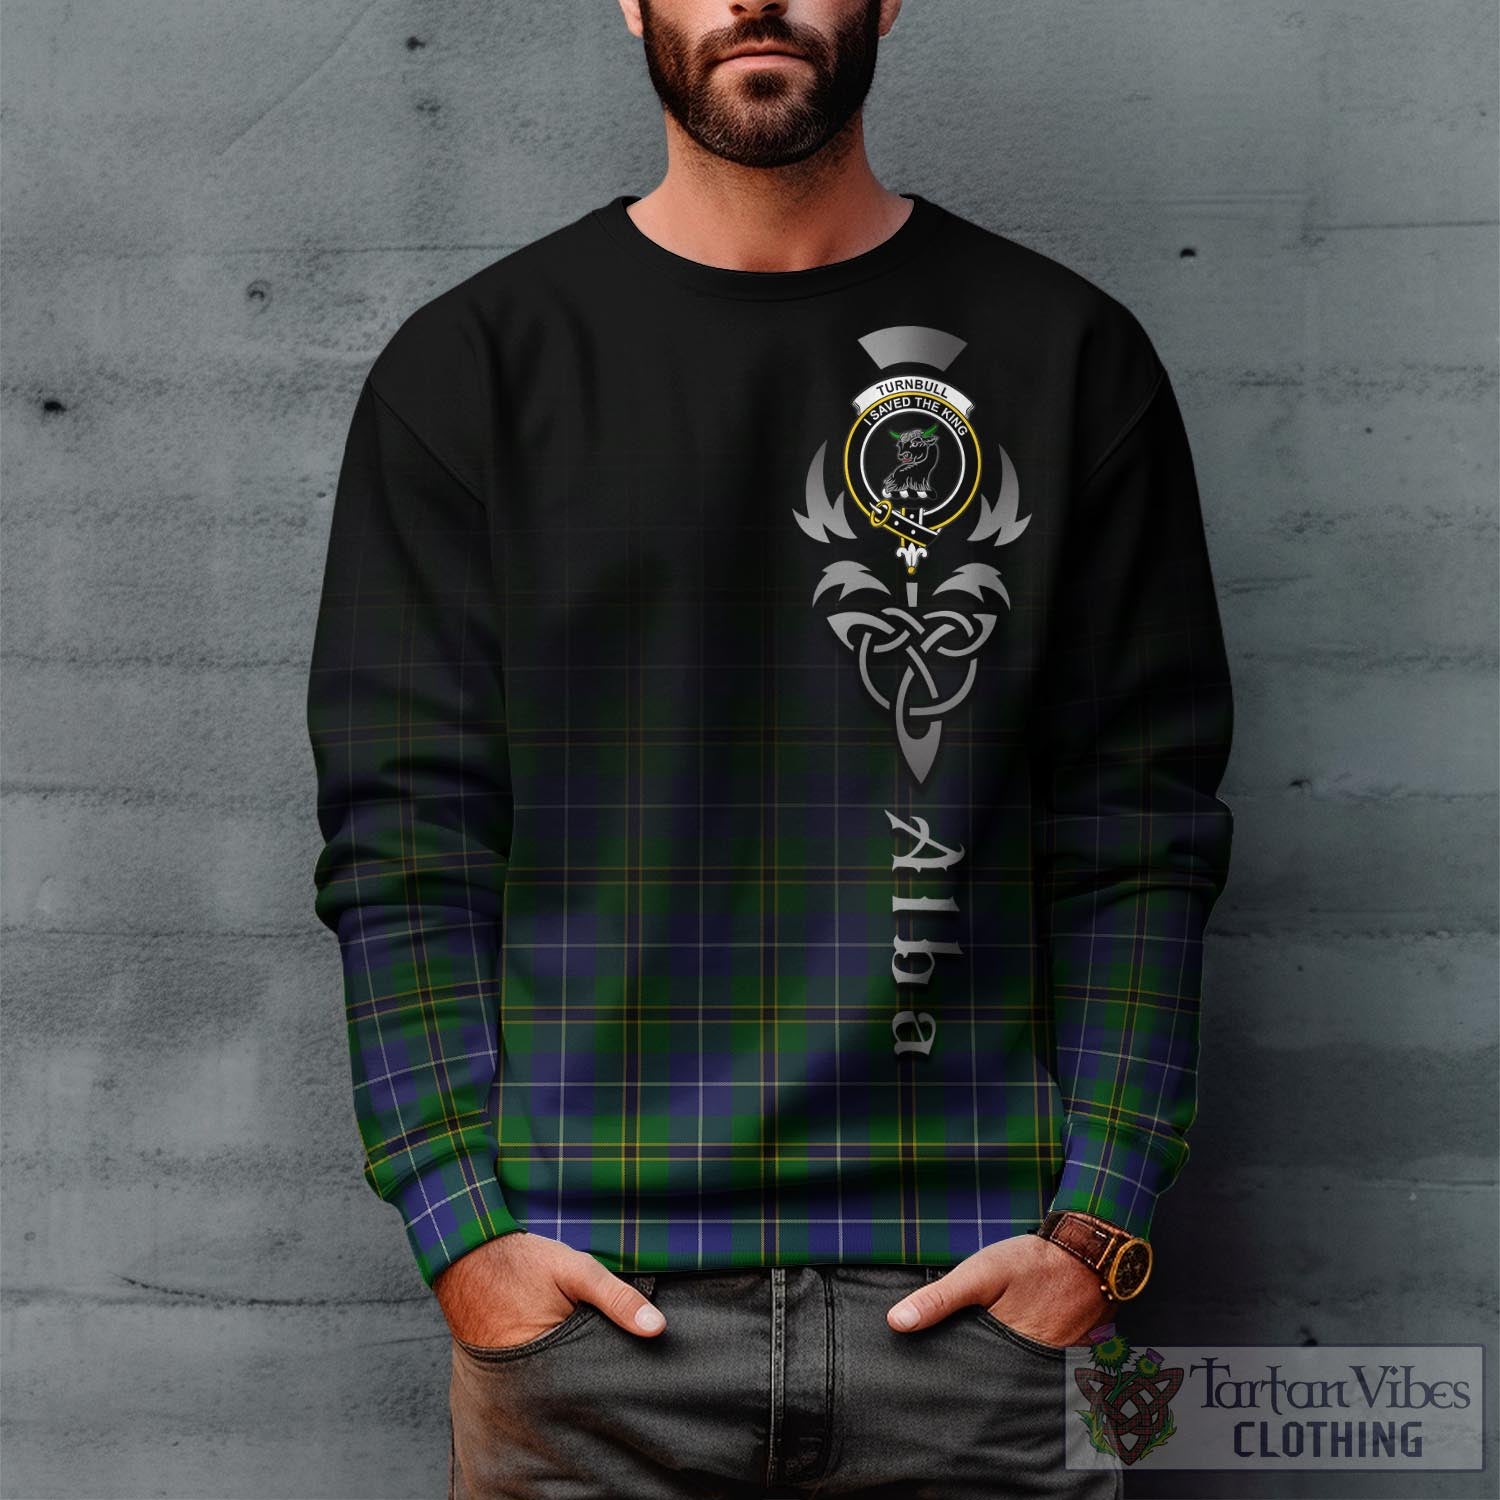 Tartan Vibes Clothing Turnbull Hunting Tartan Sweatshirt Featuring Alba Gu Brath Family Crest Celtic Inspired